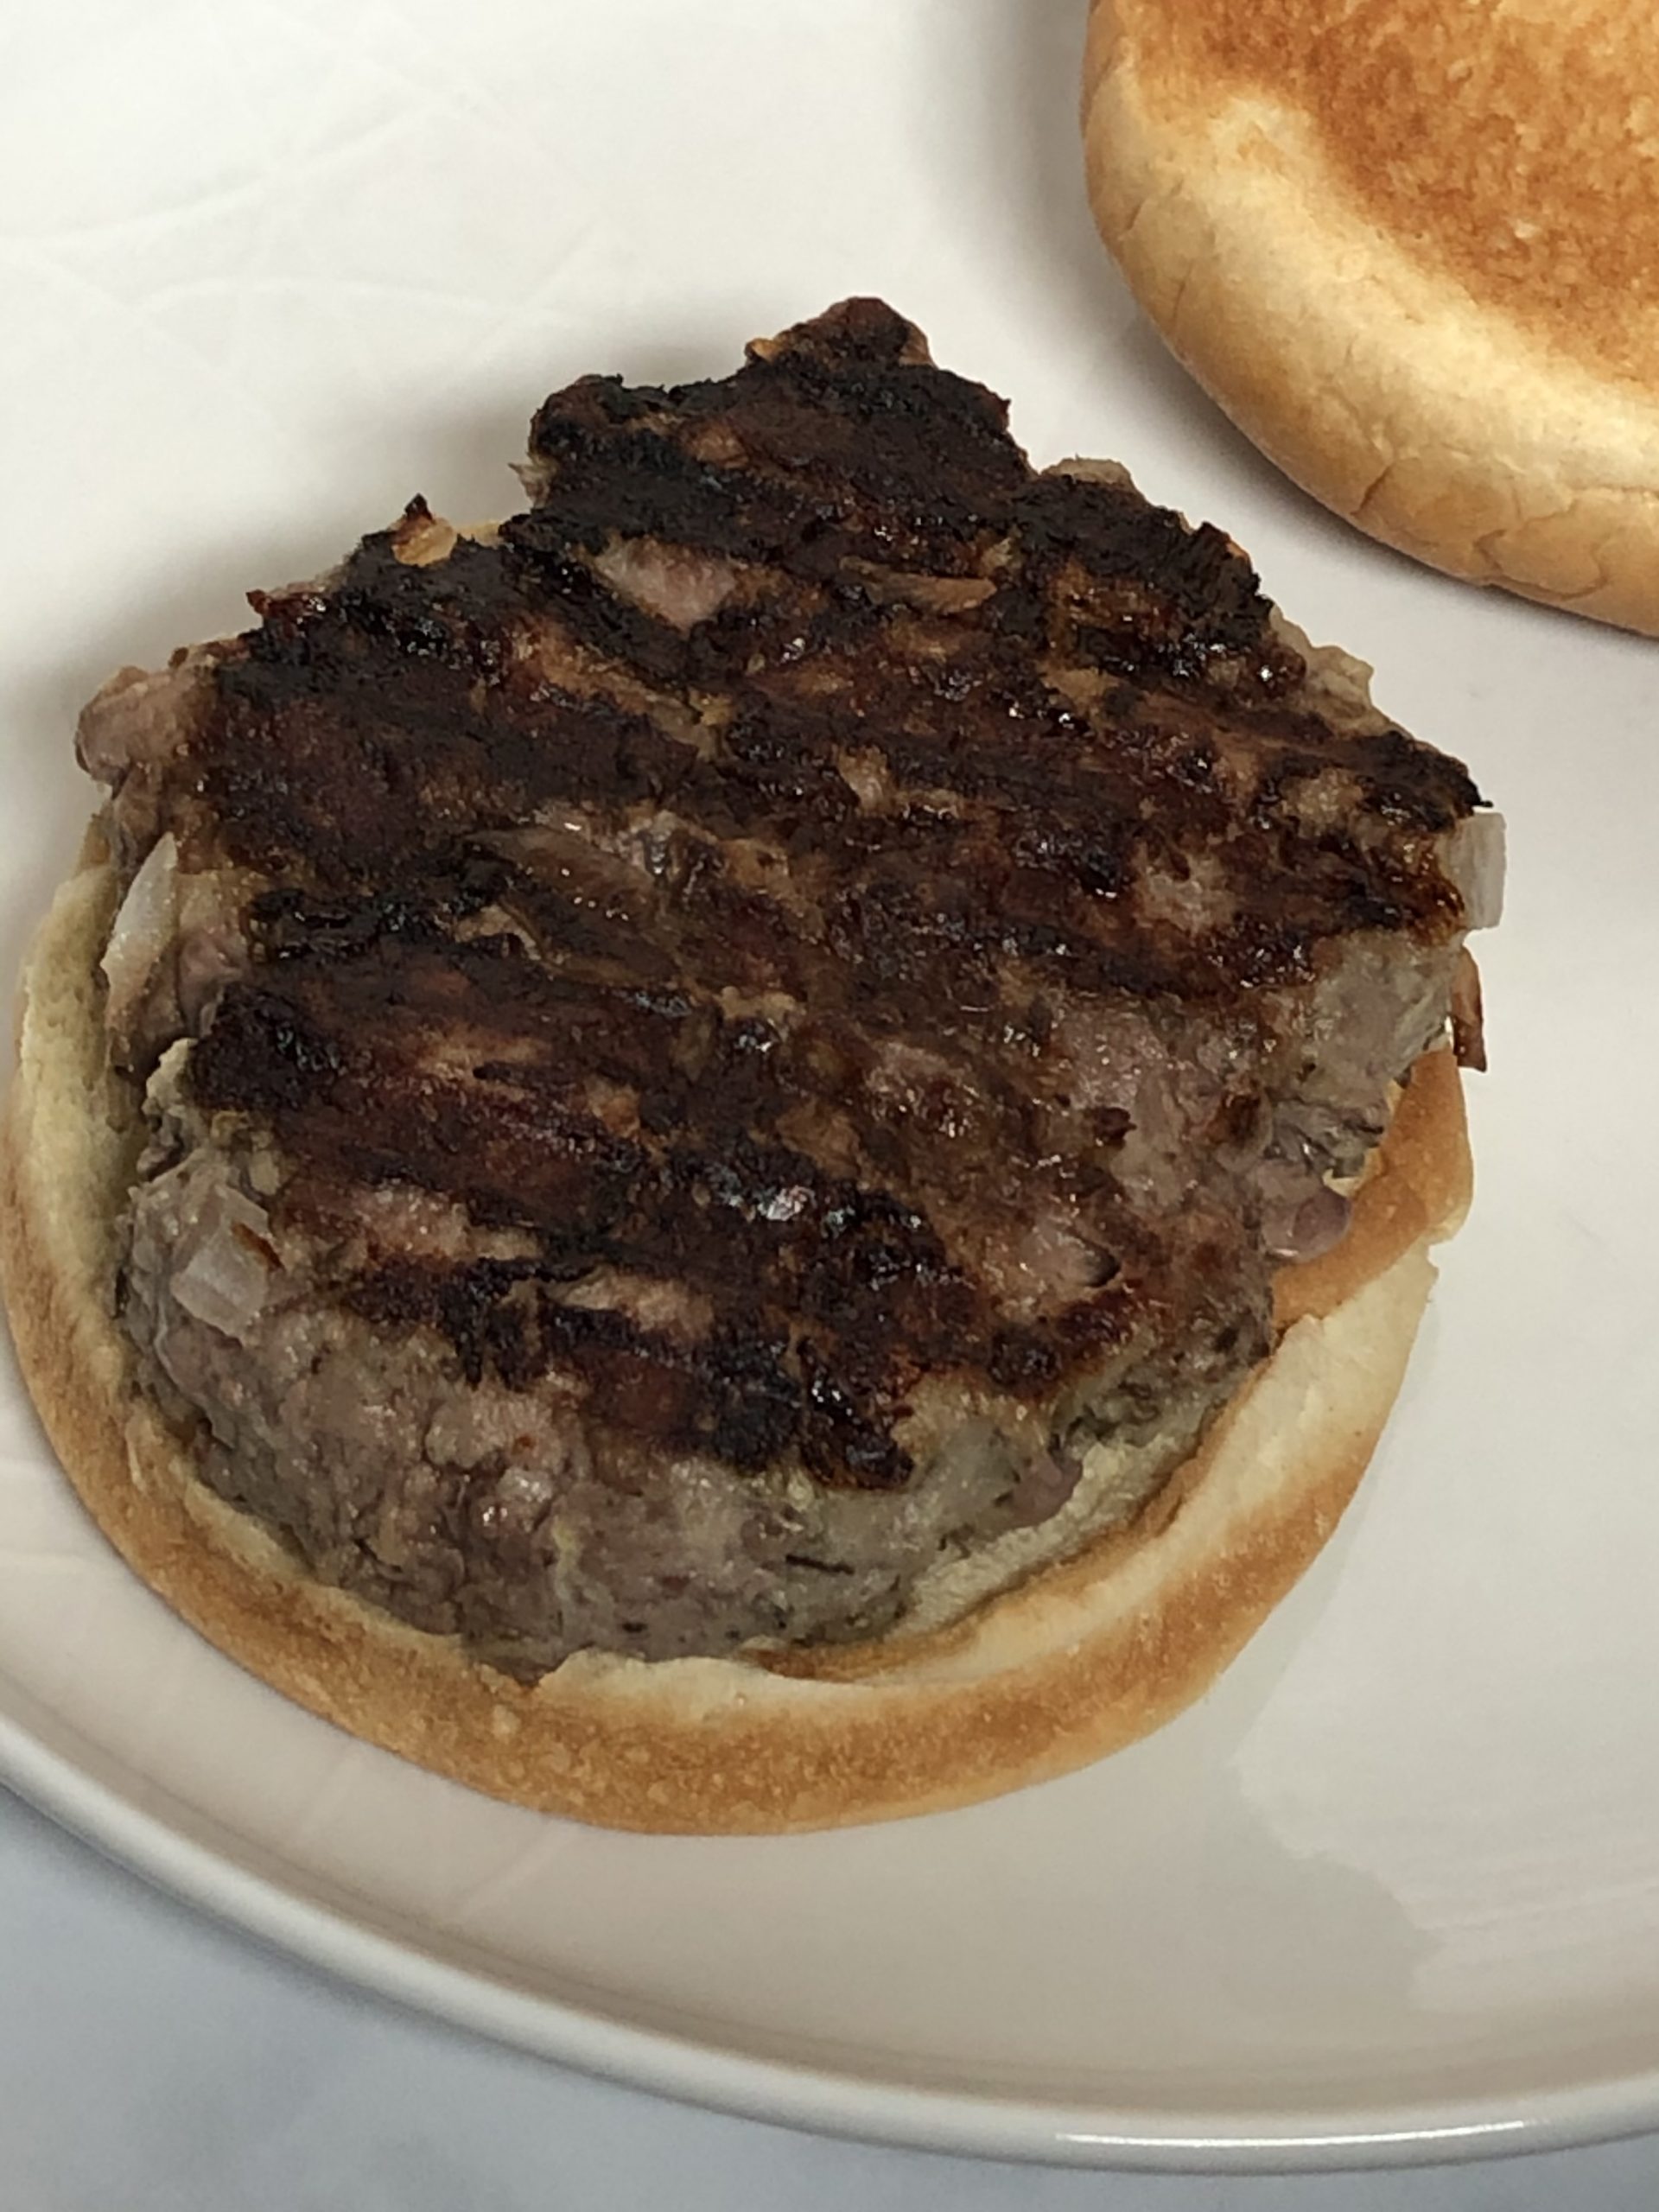 Lamb burger on the bottom half of a bun